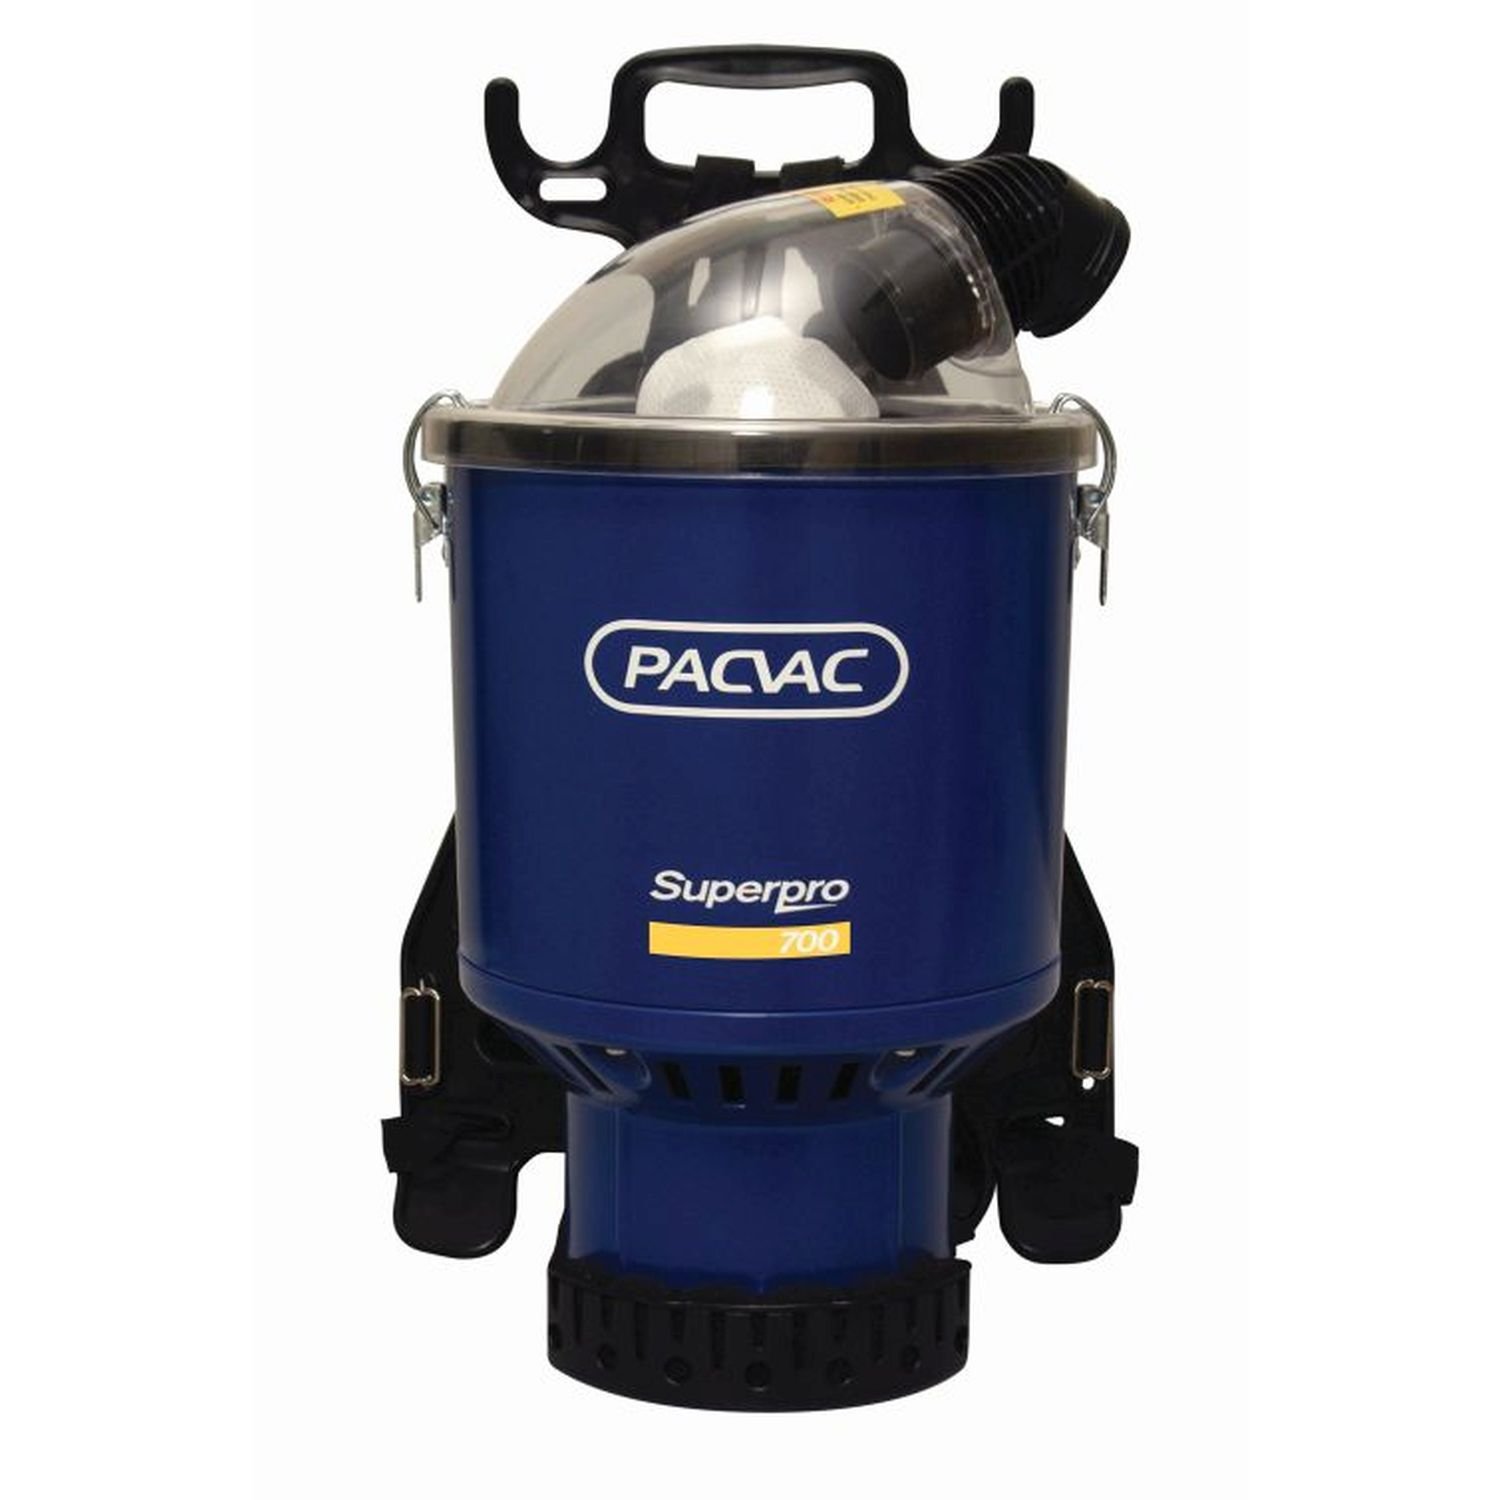 Pac Vac Superpro 700 Vacuum Cleaner